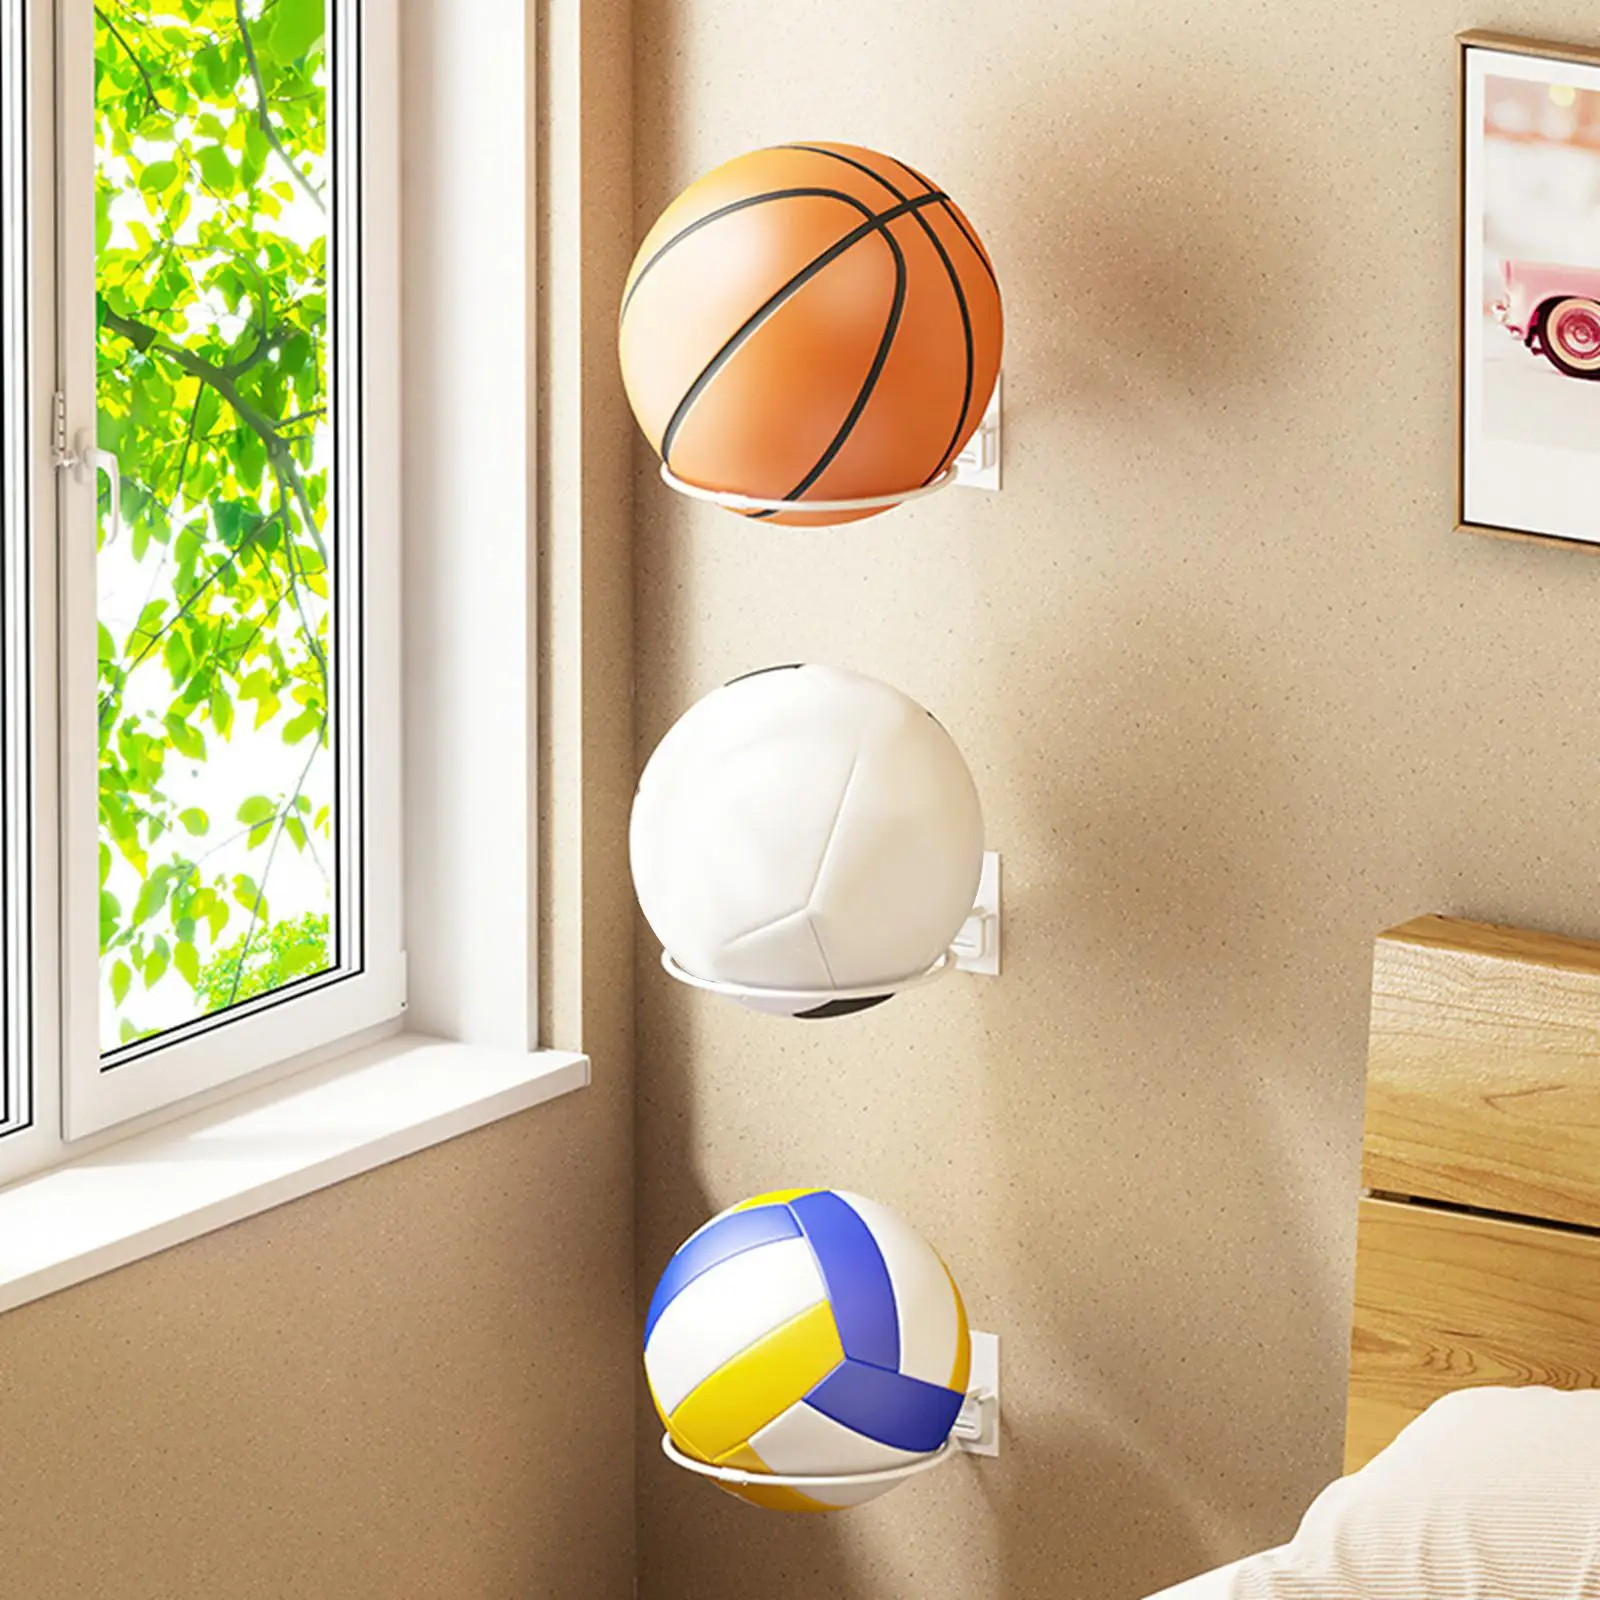 Multifunctional Sports Ball Storage Holder Rack Punch Free Basketball Wall Mount Shelf Bracket Display